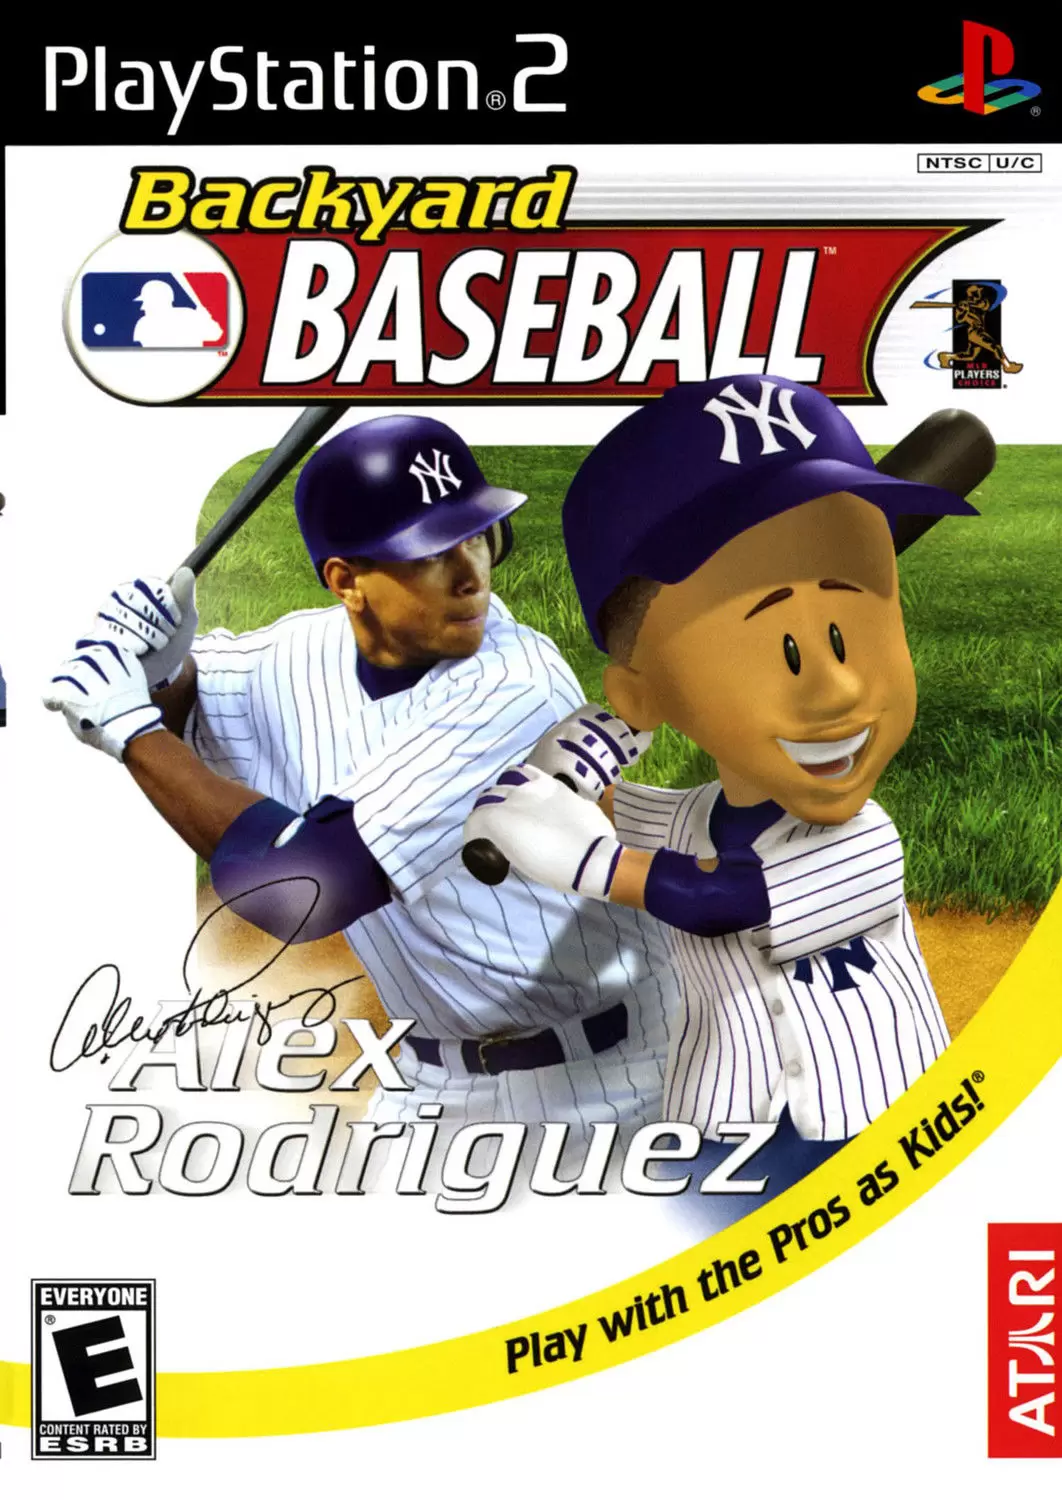 PS2 Games - Backyard Baseball